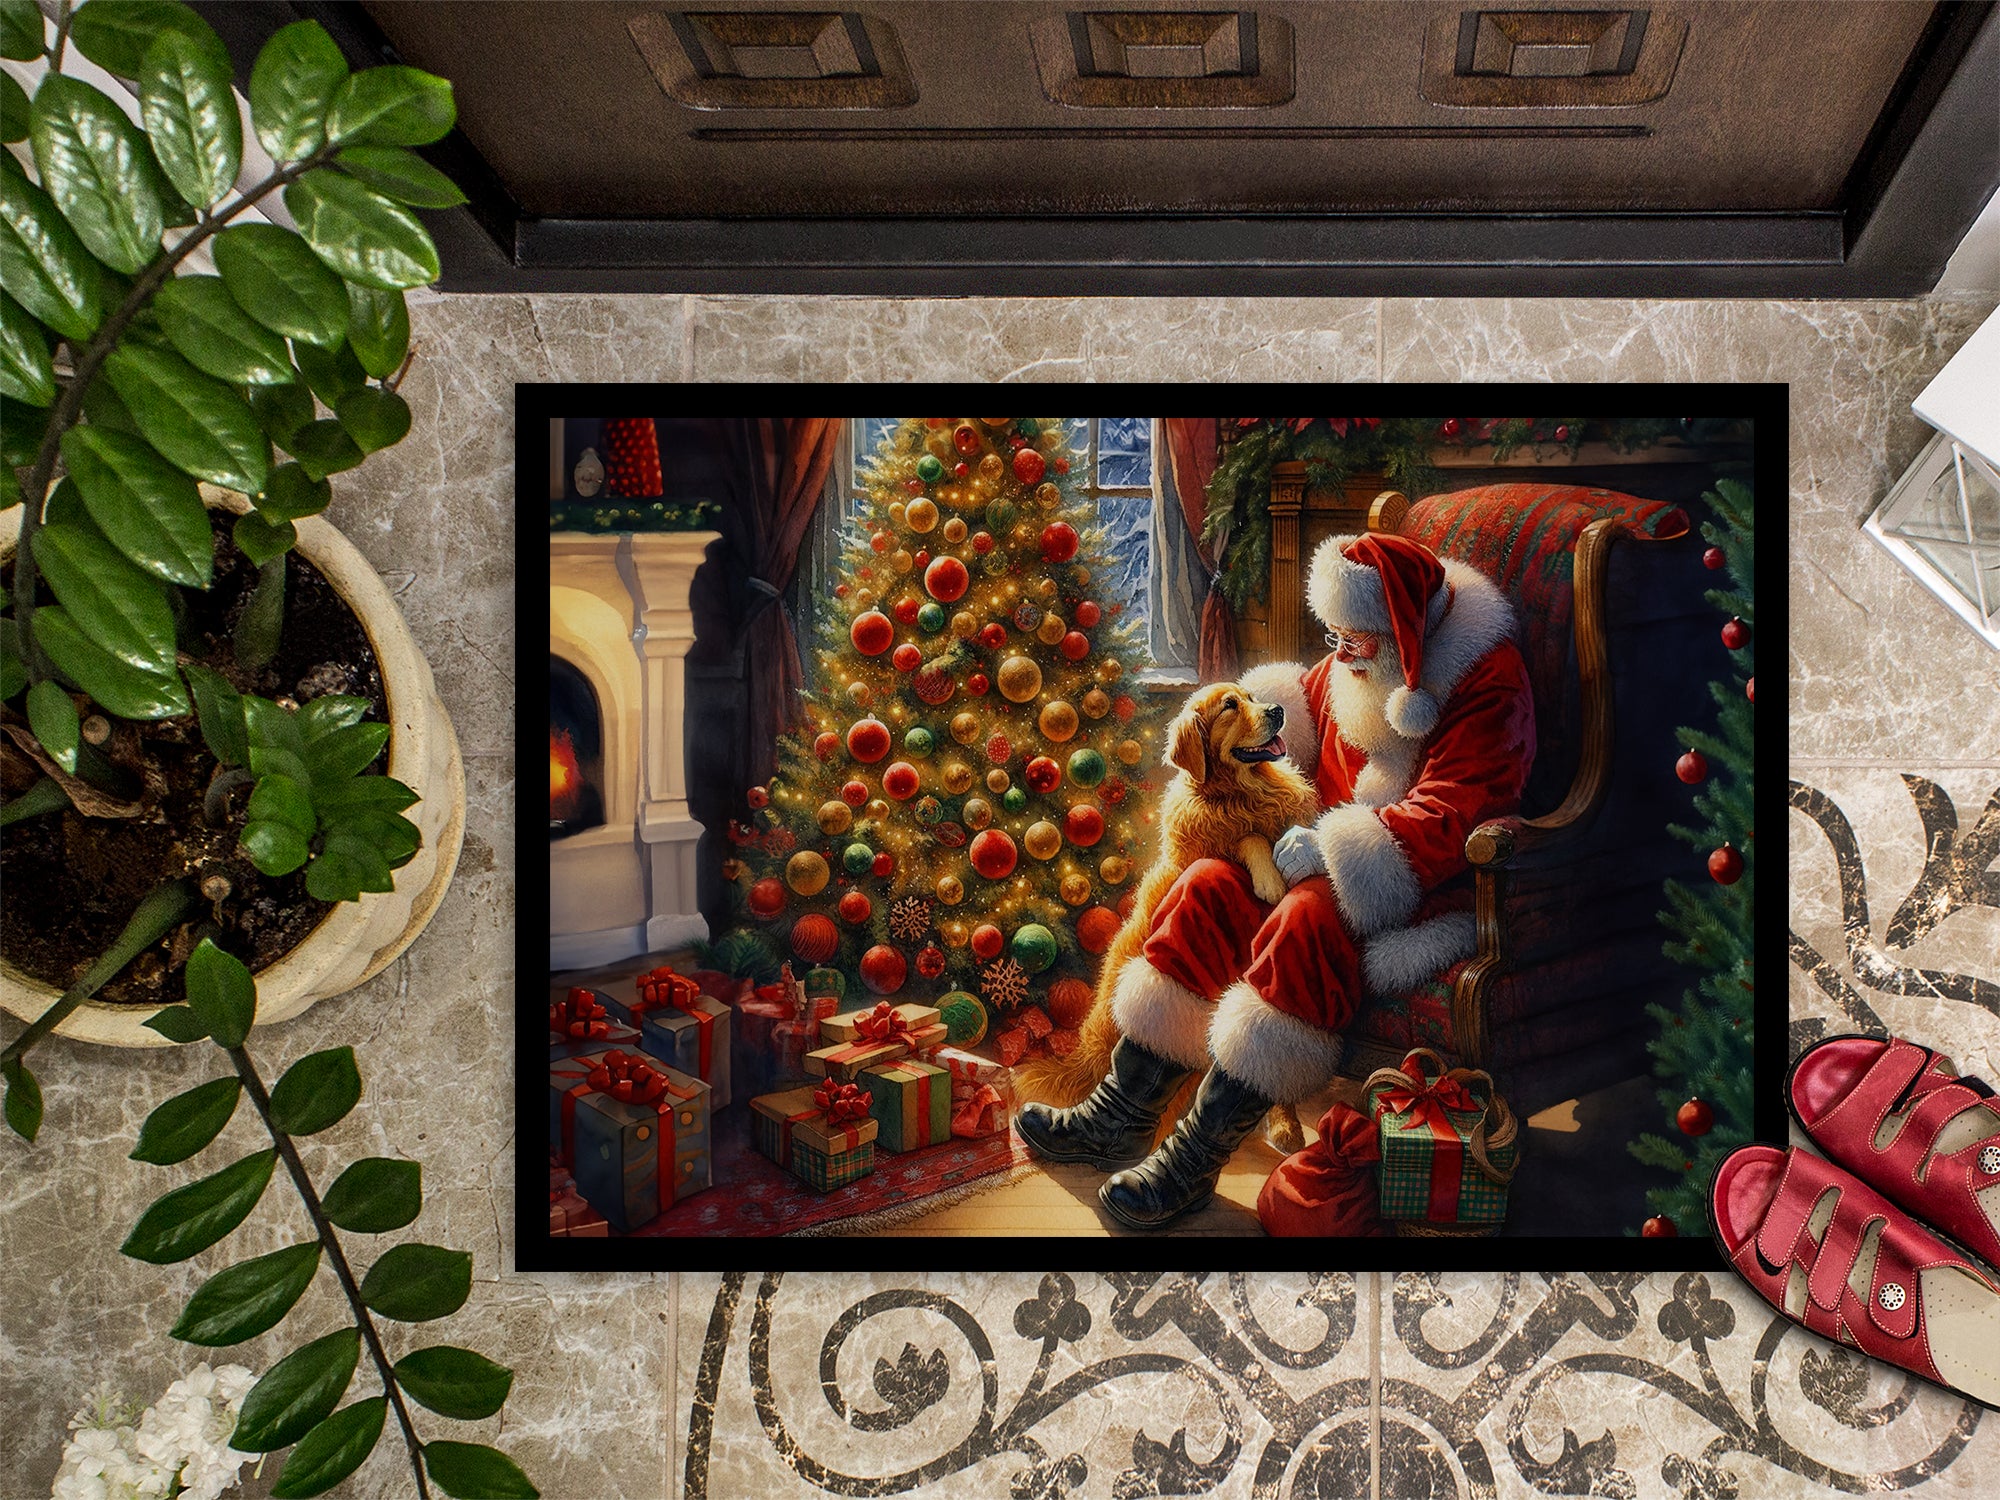 Golden Retriever and Santa Claus Doormat